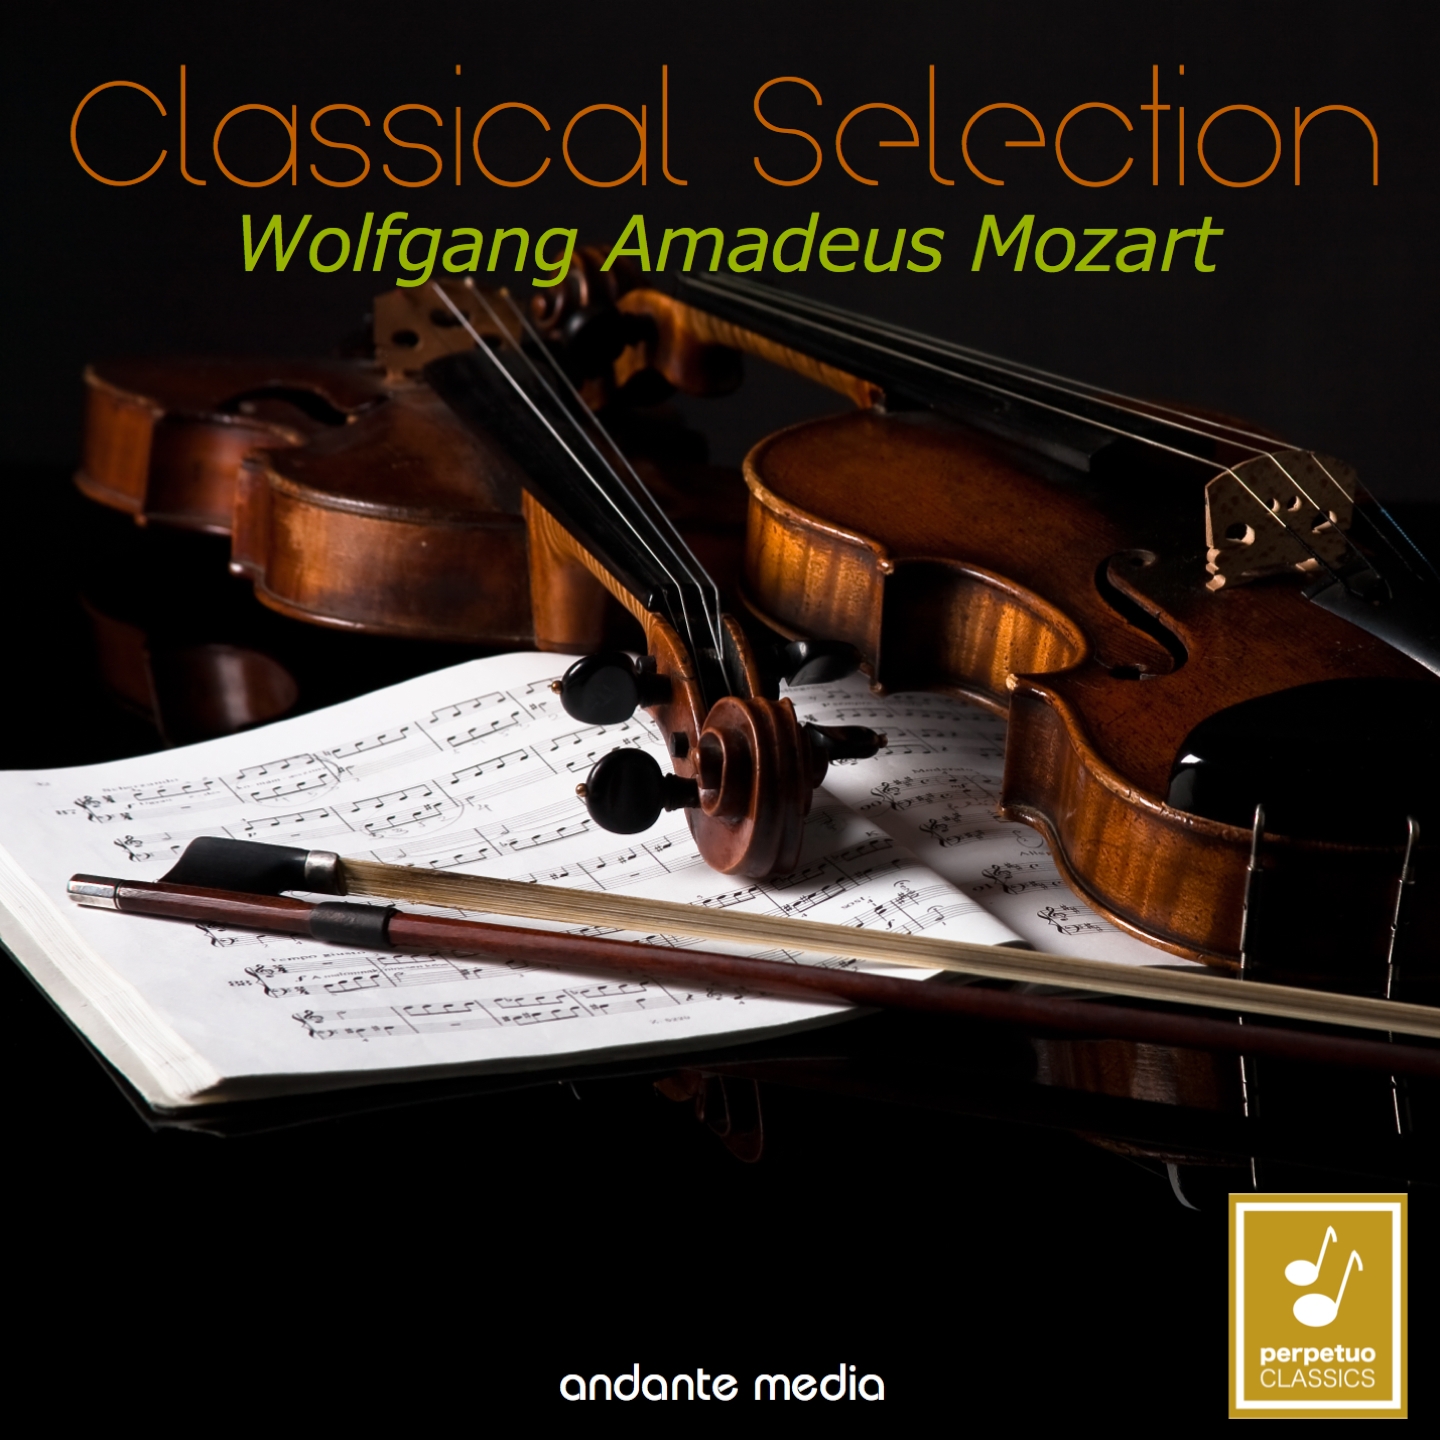 Concertone for 2 Violins in C Major, K. 190: II. Andantino grazioso